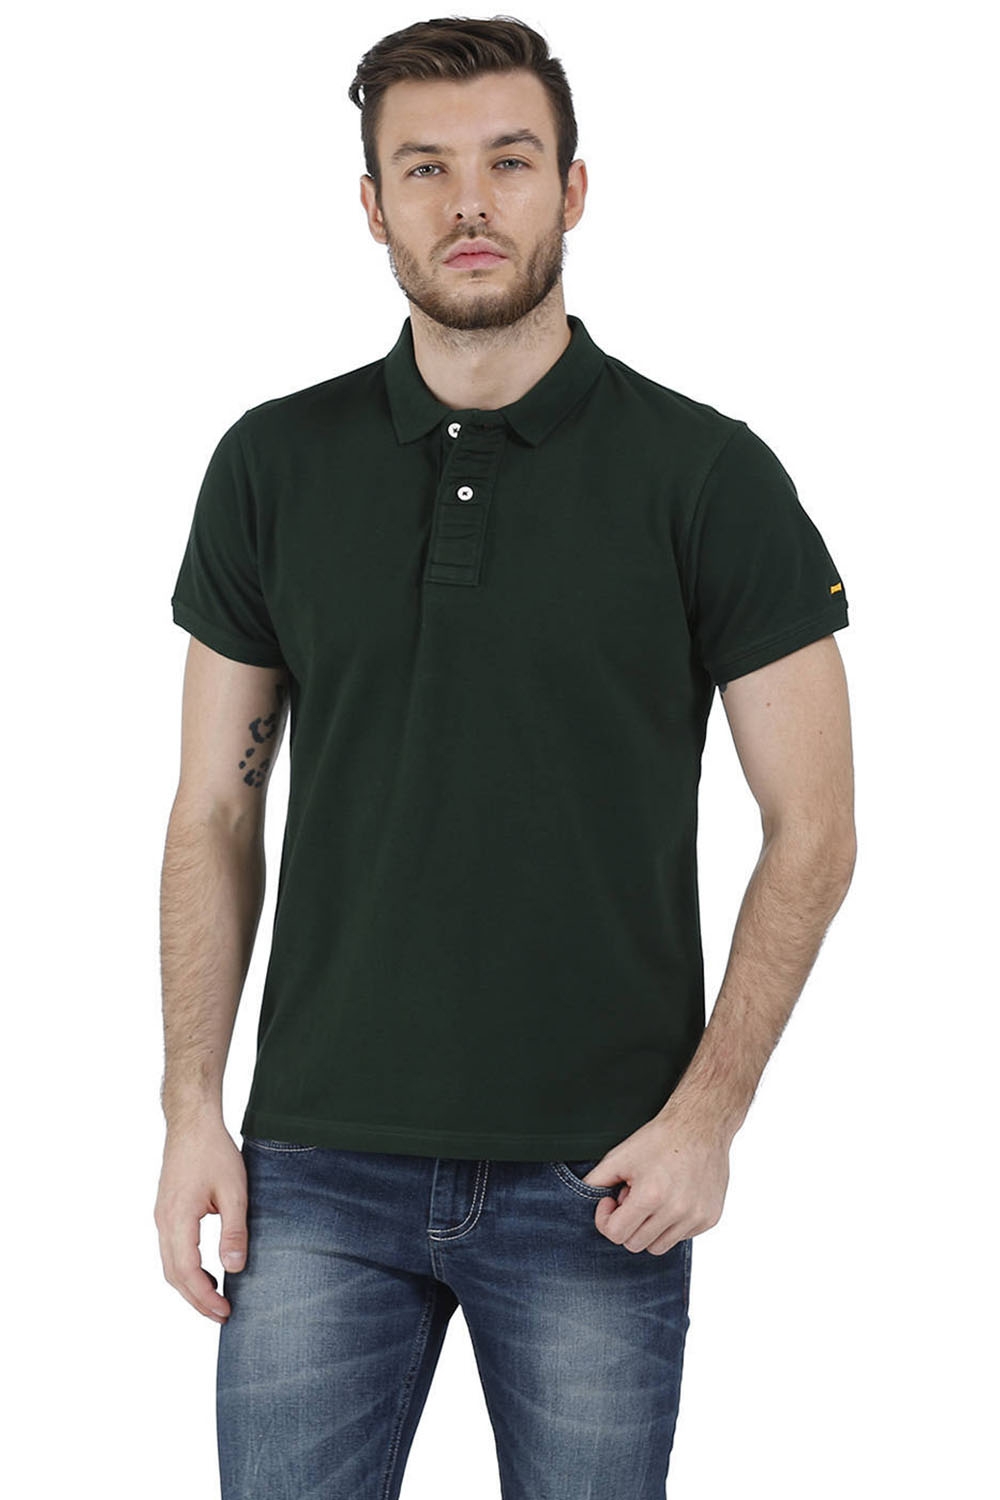 Basics | Basics Muscle Fit Dark-Green Piqu Polo T-Shirt